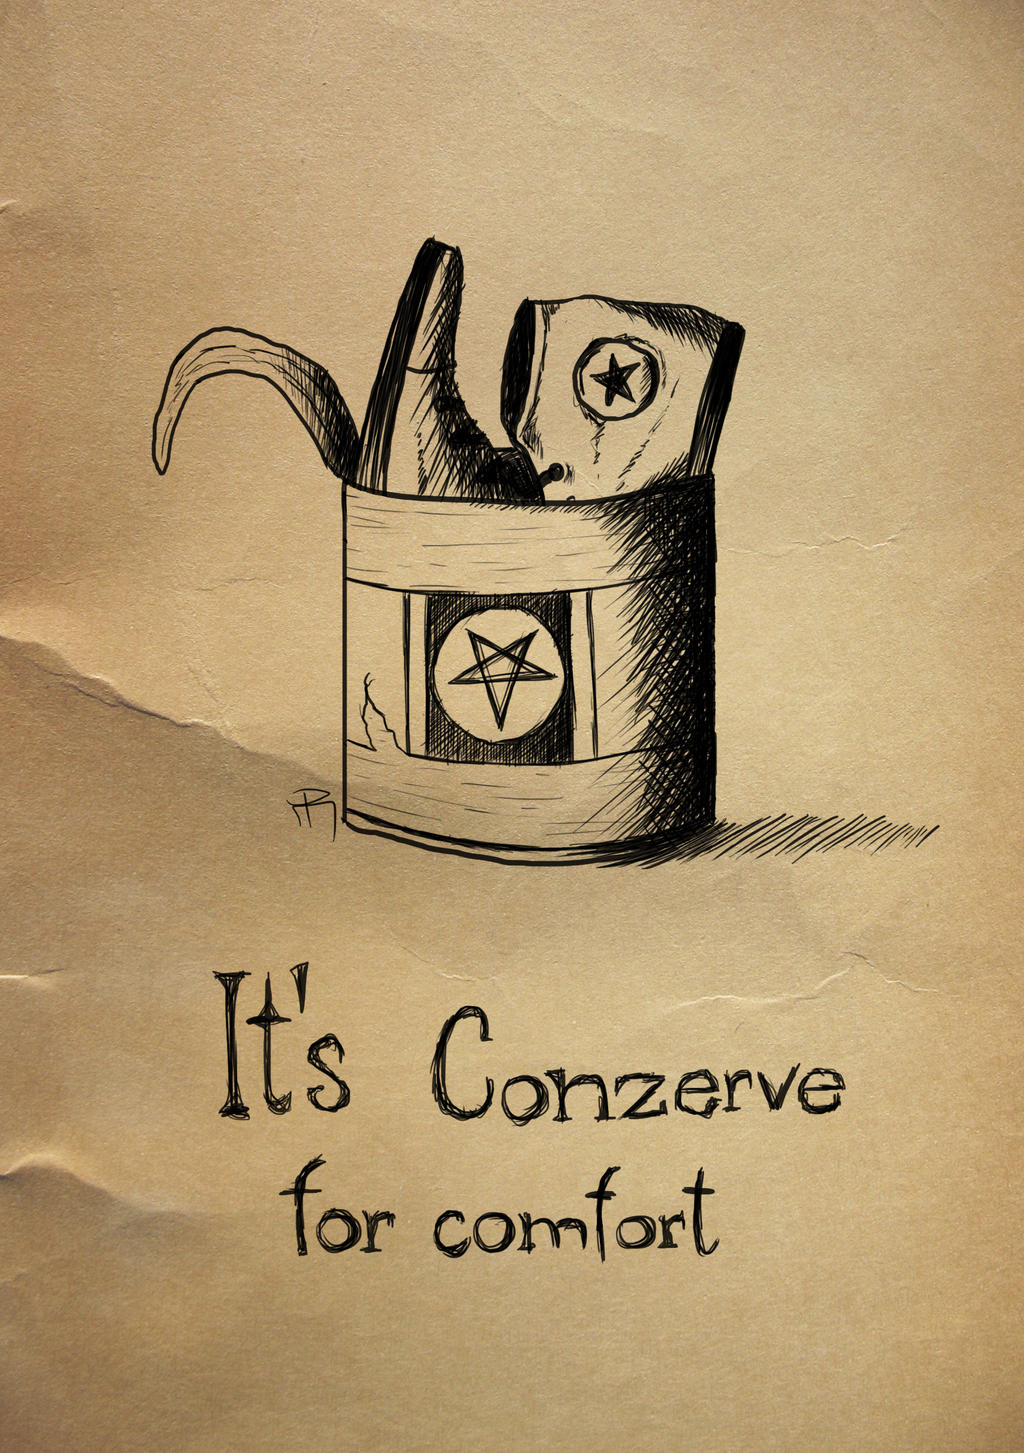 Converse - Conzerve